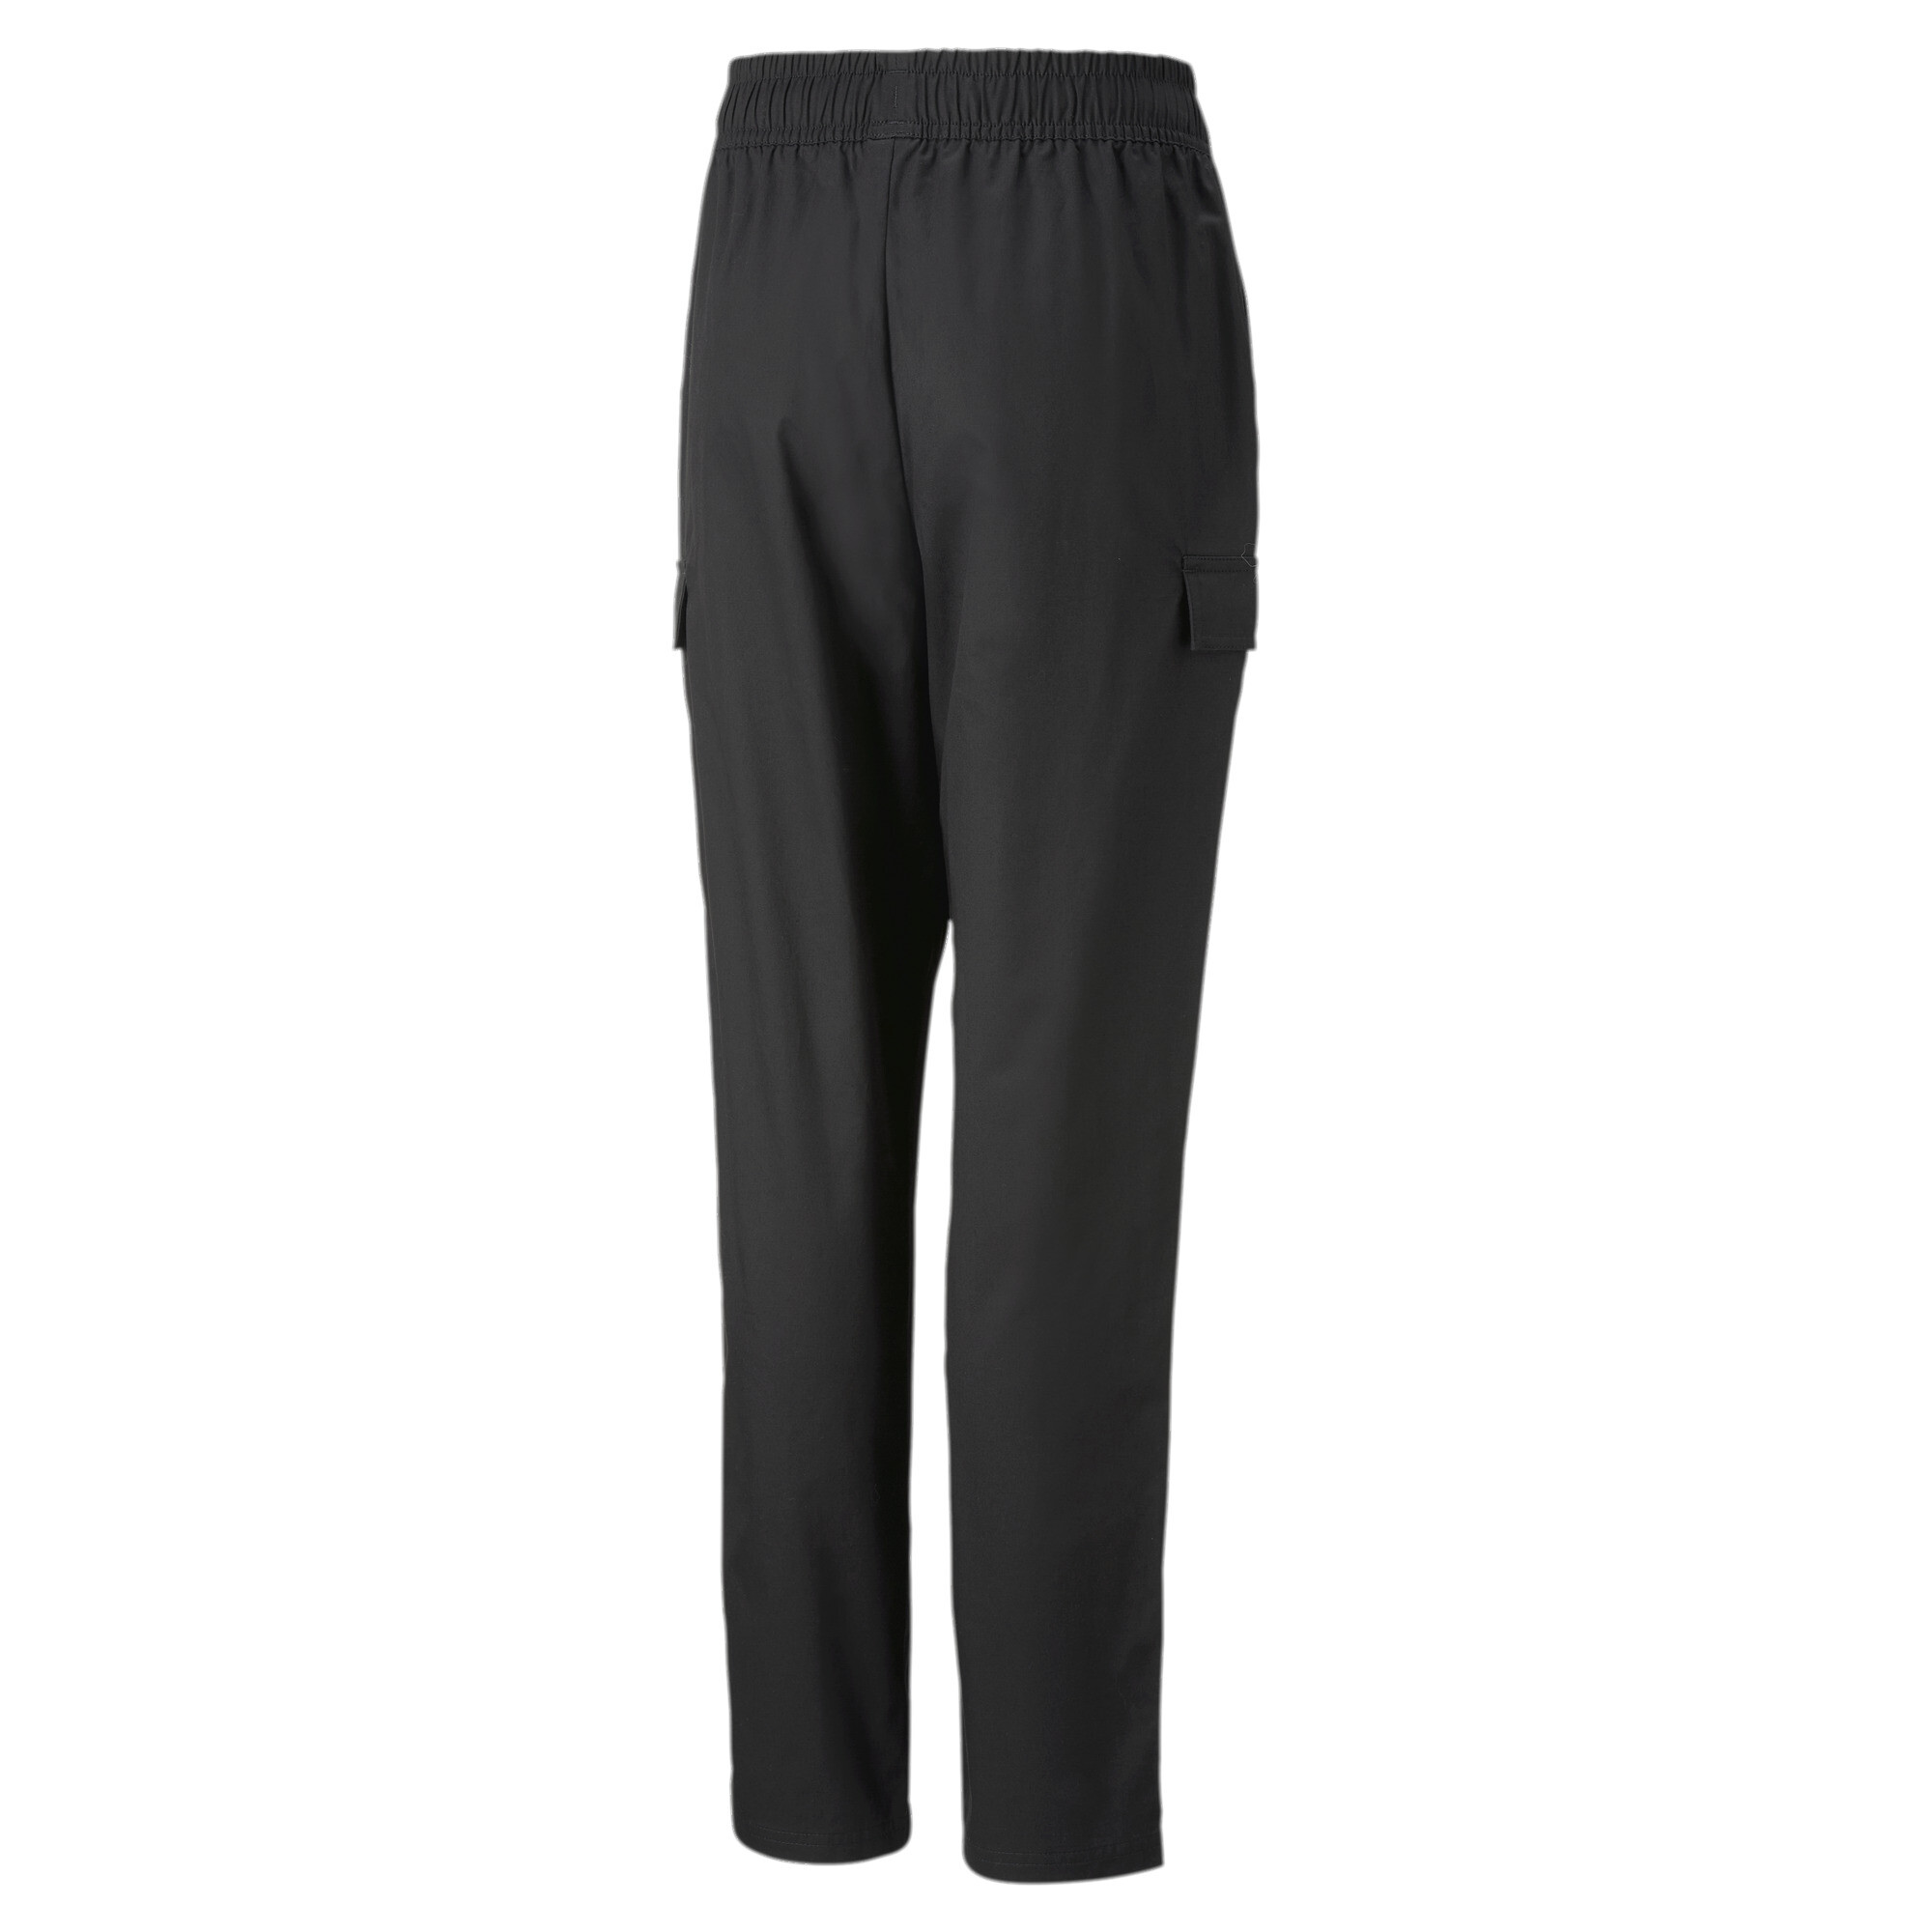 Puma Classics Woven Sweatpants Youth, Black, Size 5-6Y, Clothing